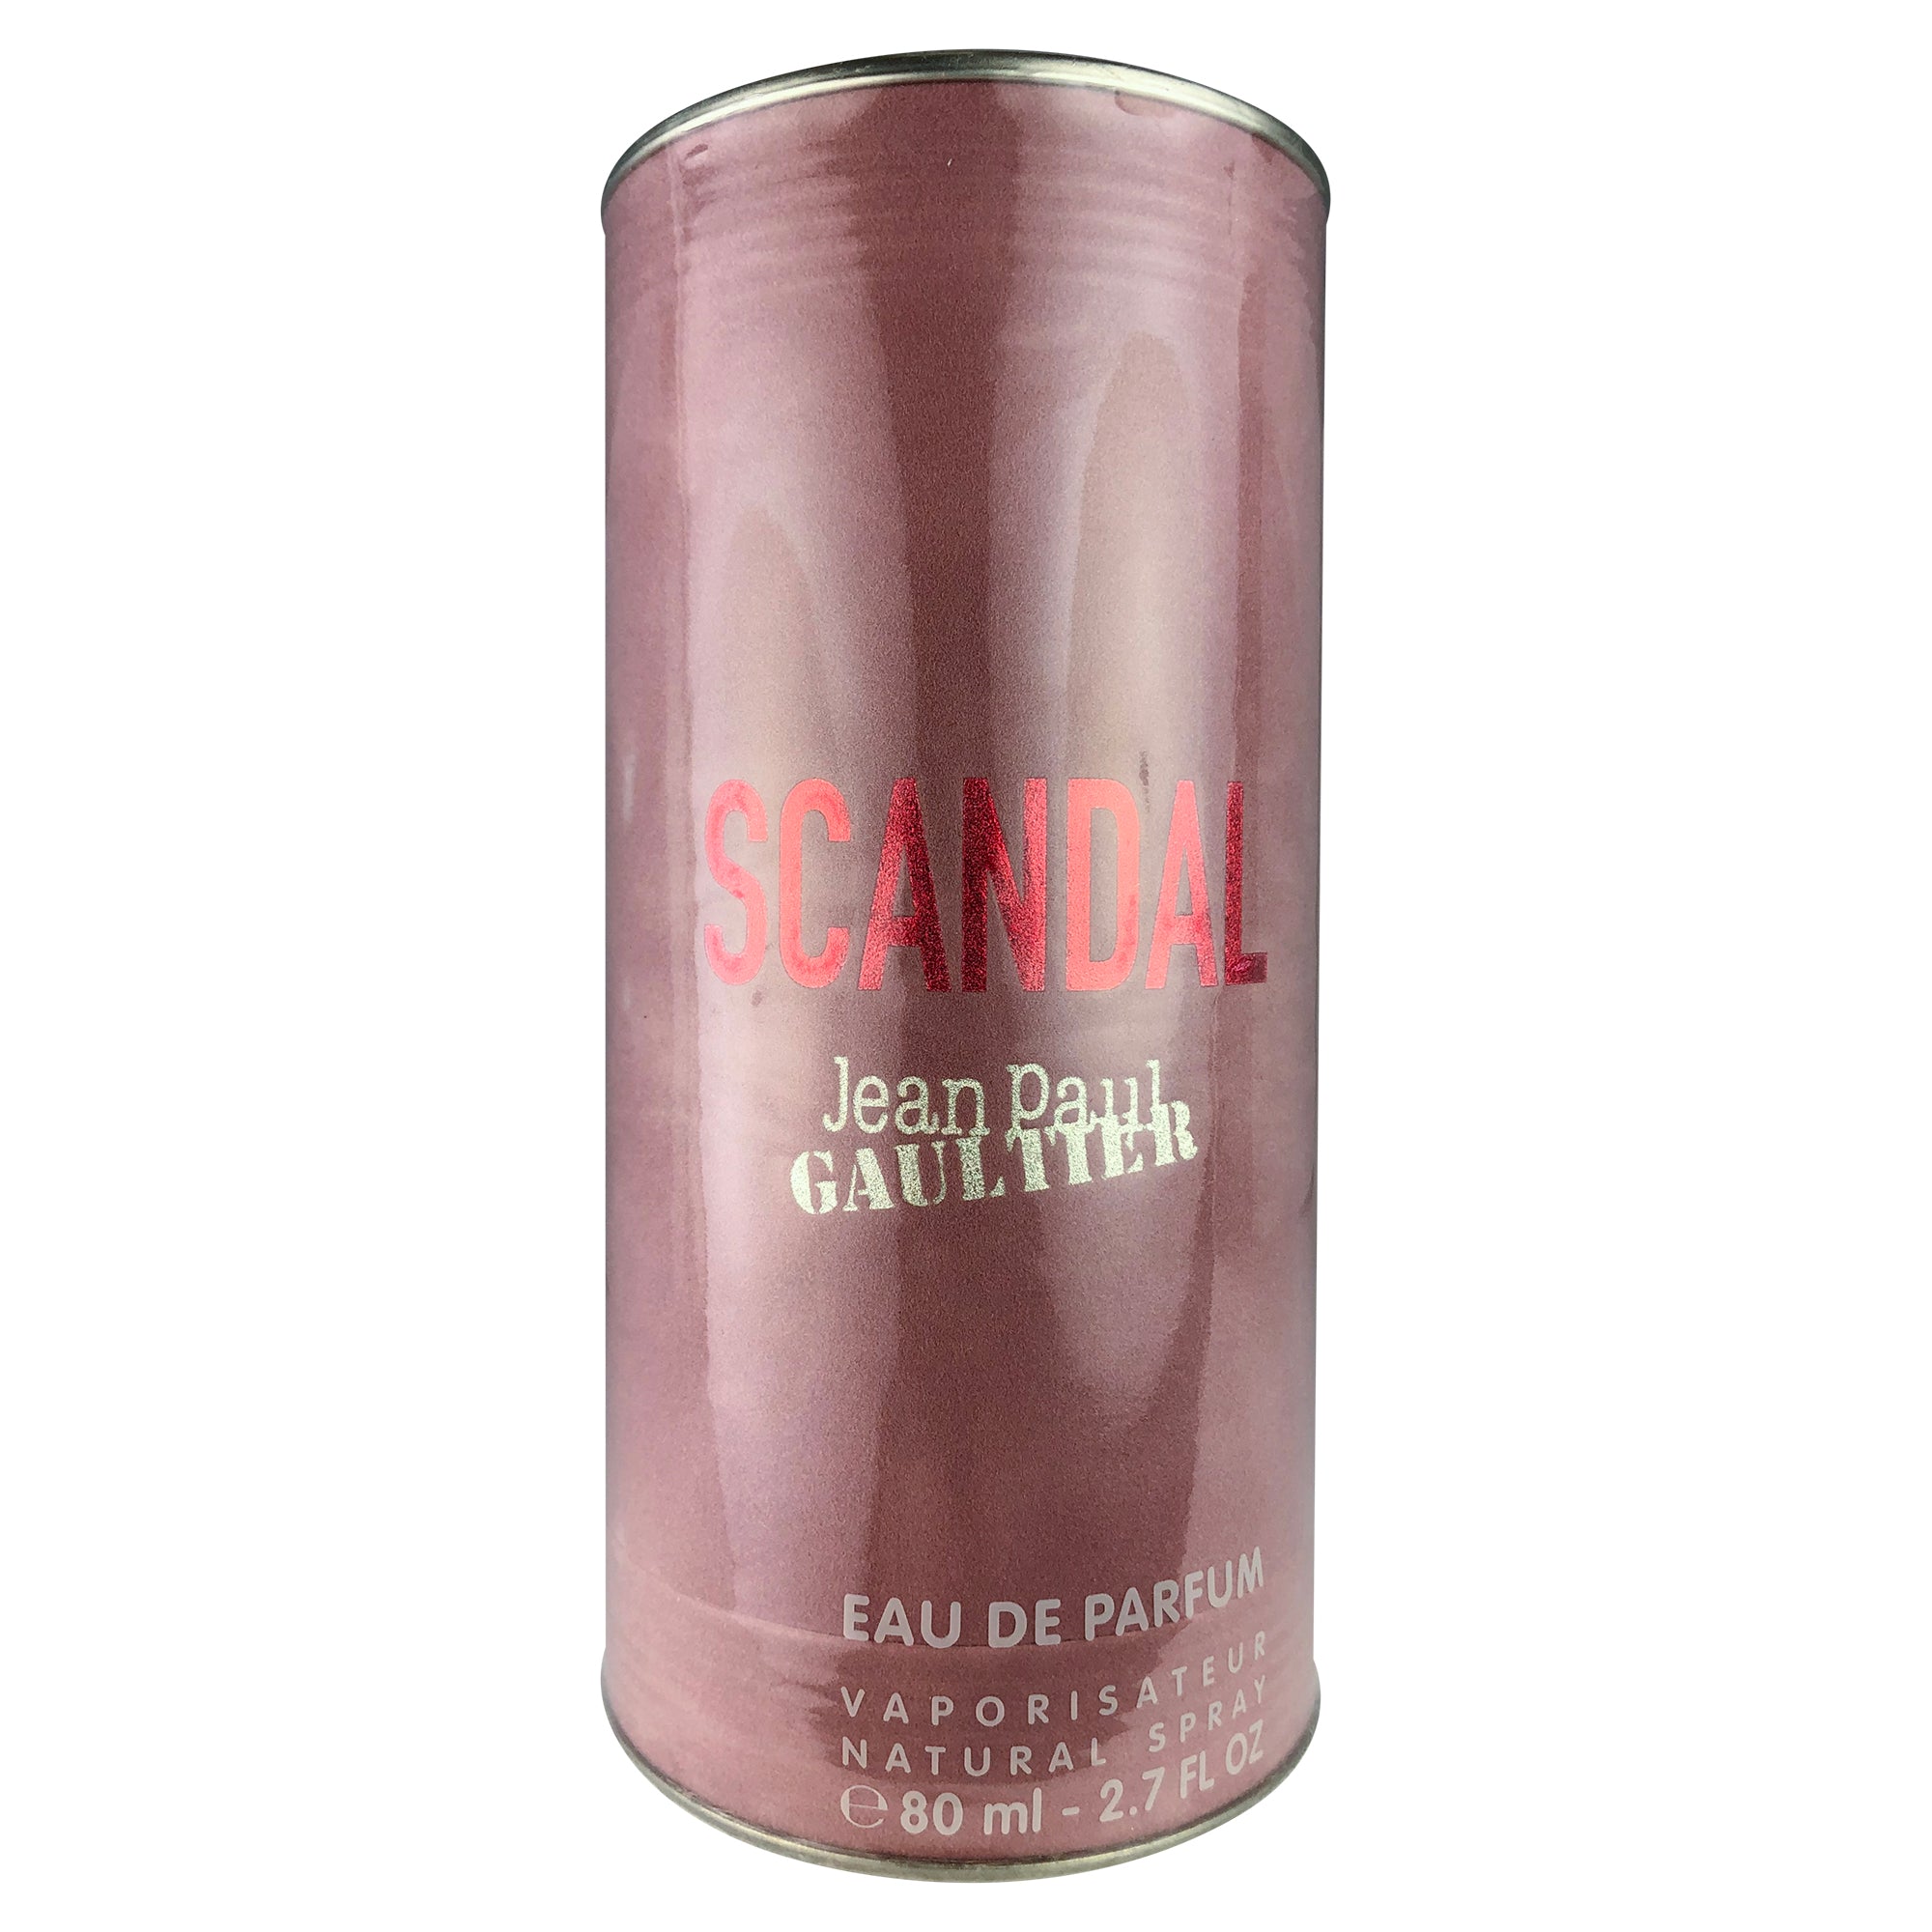 Scandal by Jean Paul Gaultier 2.7 oz Eau de Parfum Spray